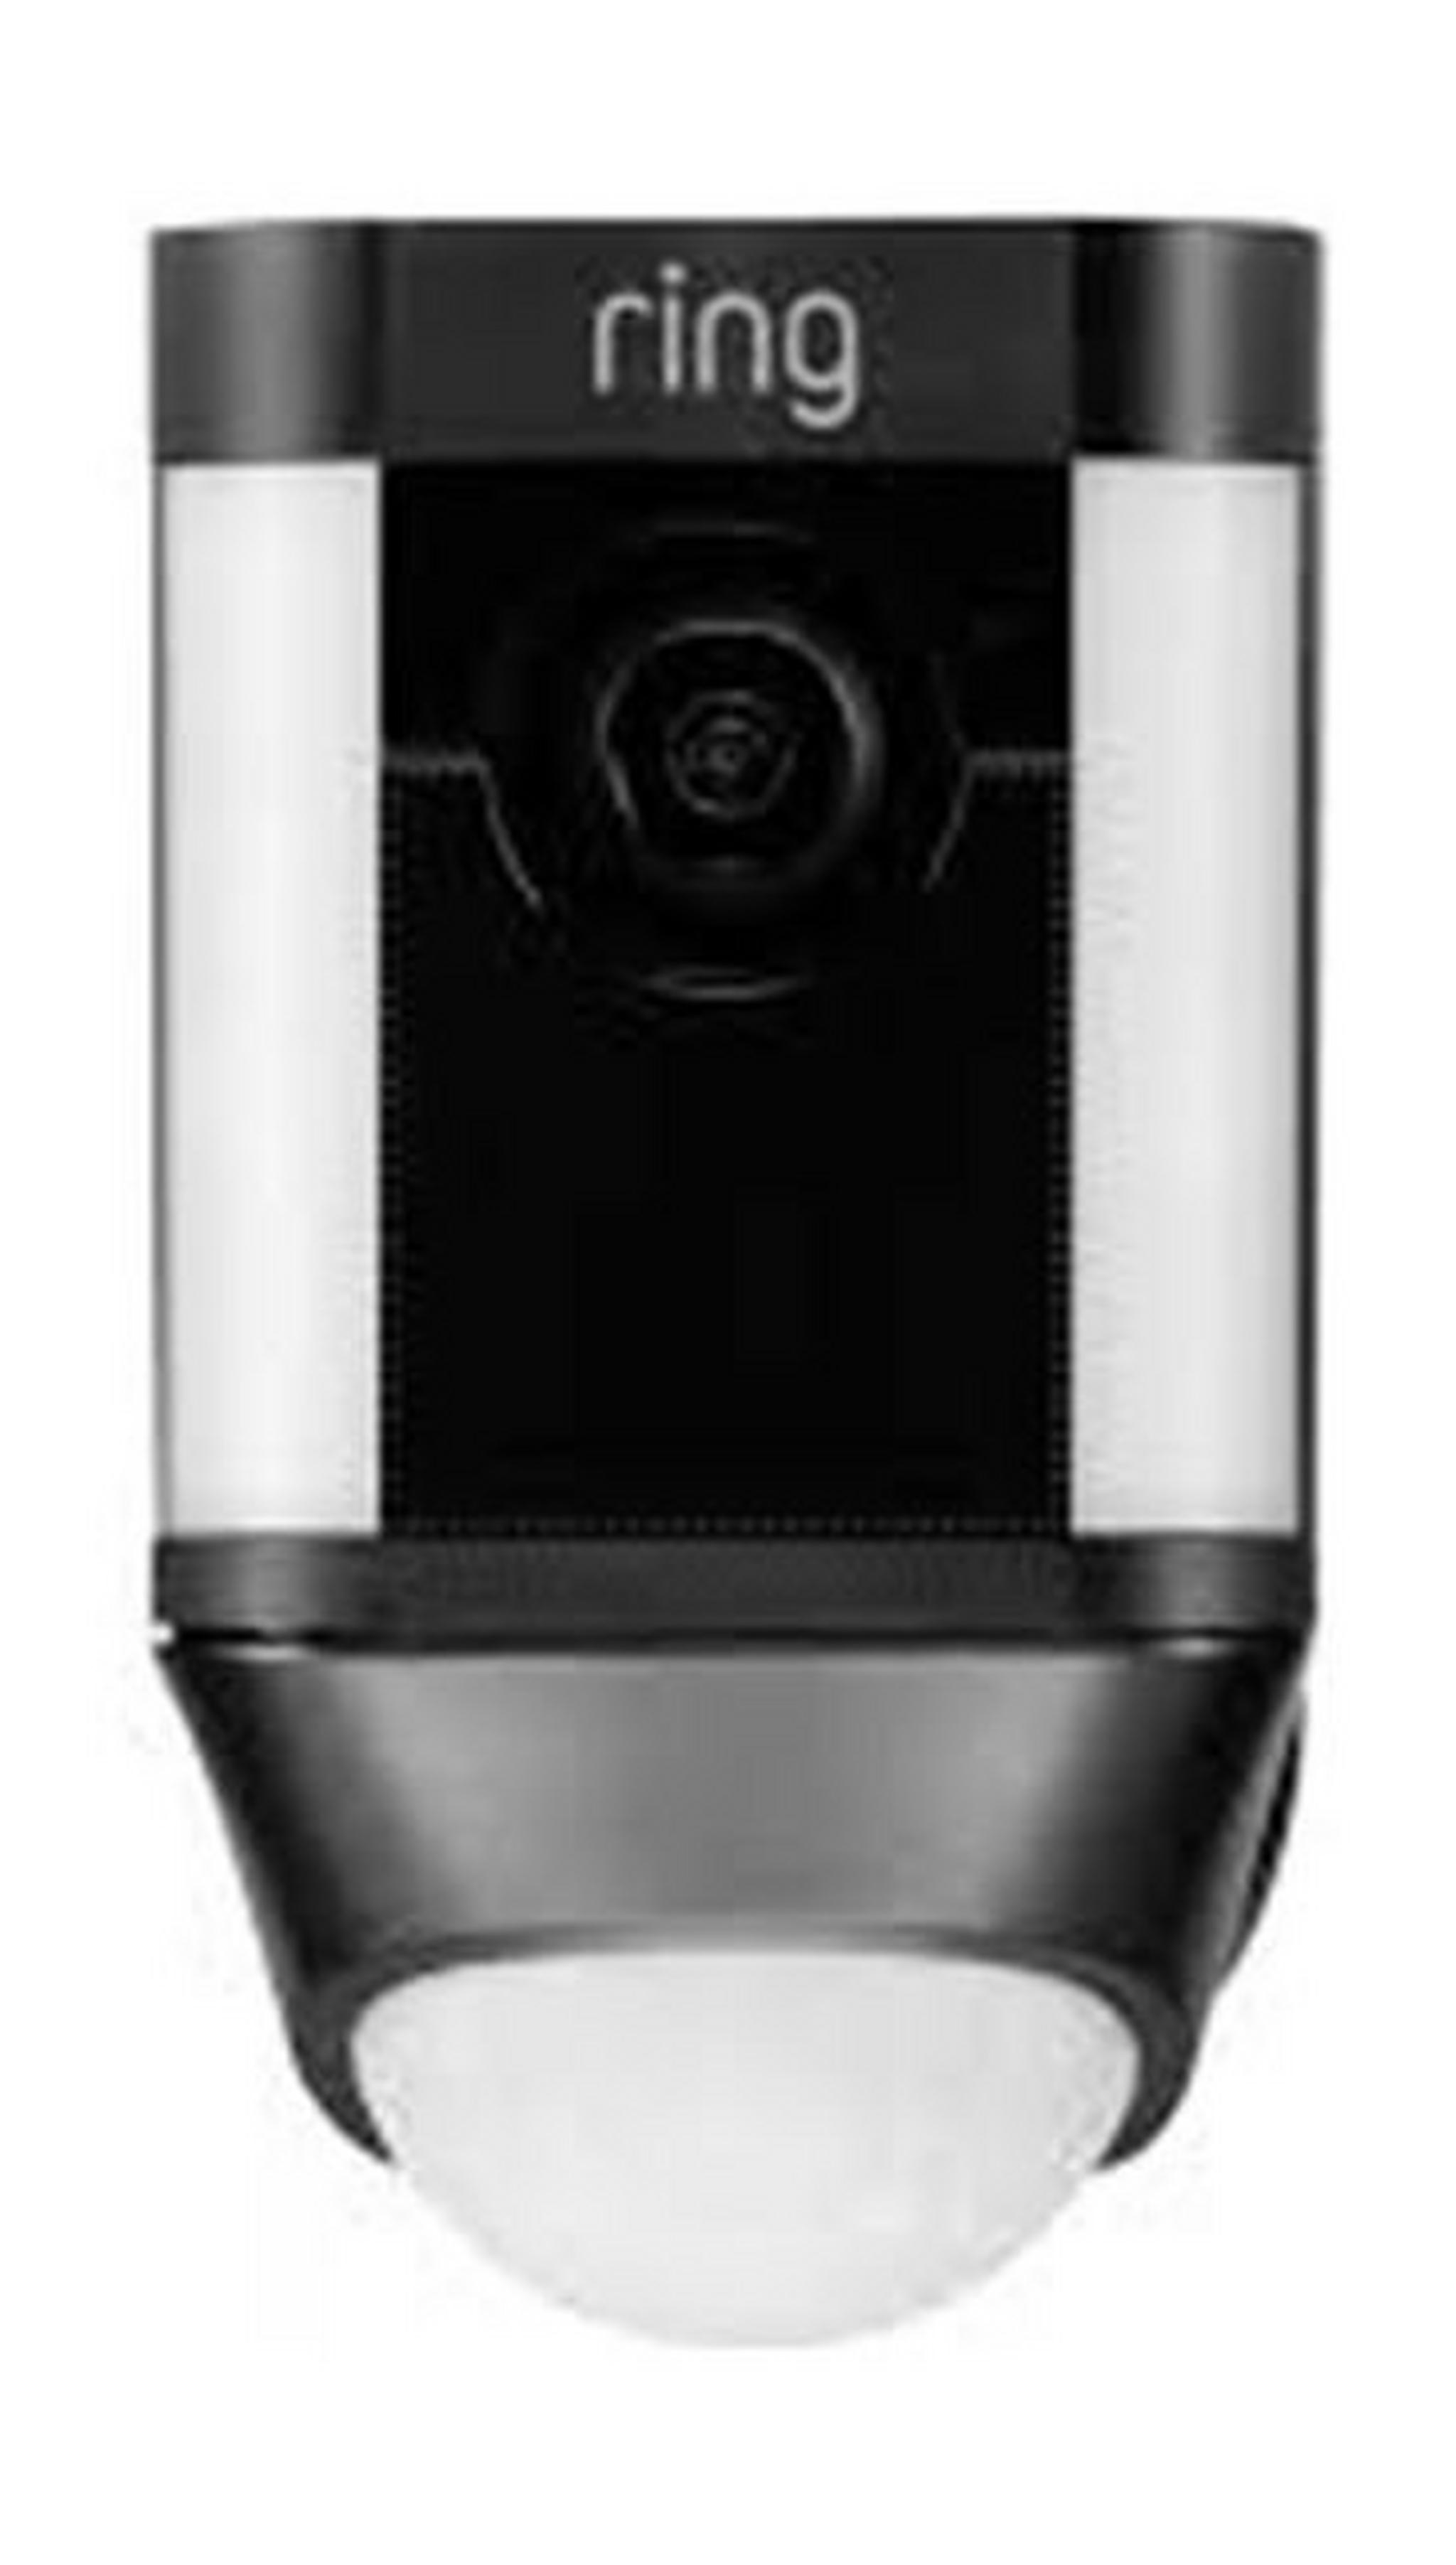 Ring Spotlight Smart  Home Security Camera - Black